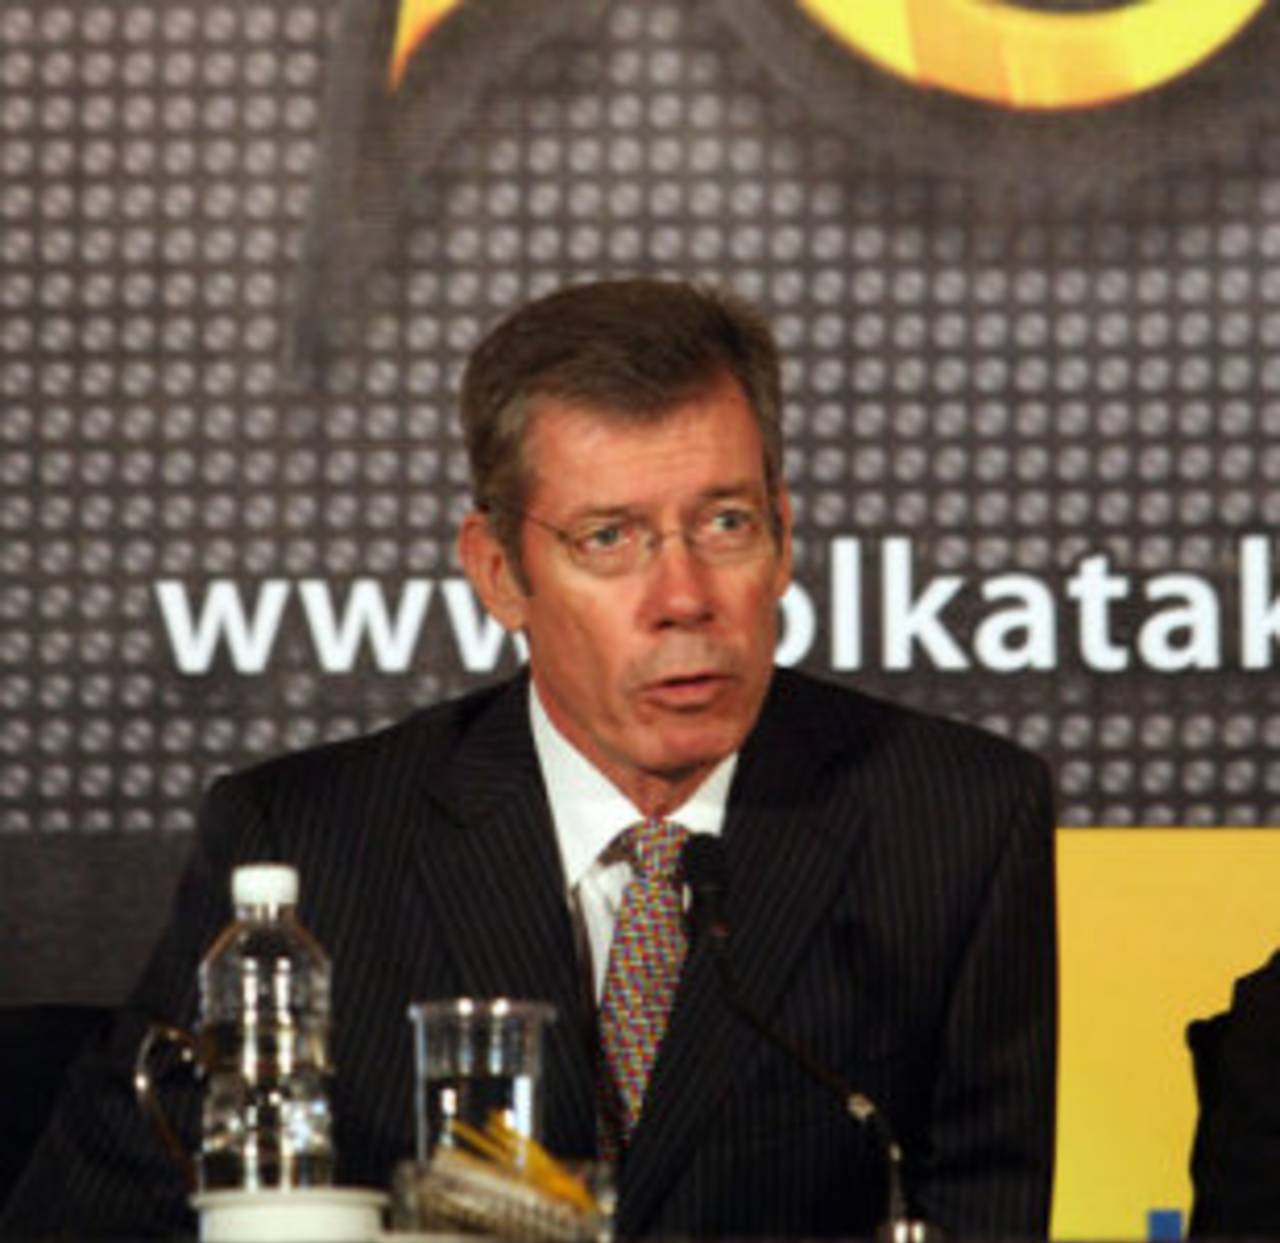 John Buchanan, coach of the Kolkata Knight Riders, speaks at the function, Indian Premier League, Kolkata, March 11, 2008 